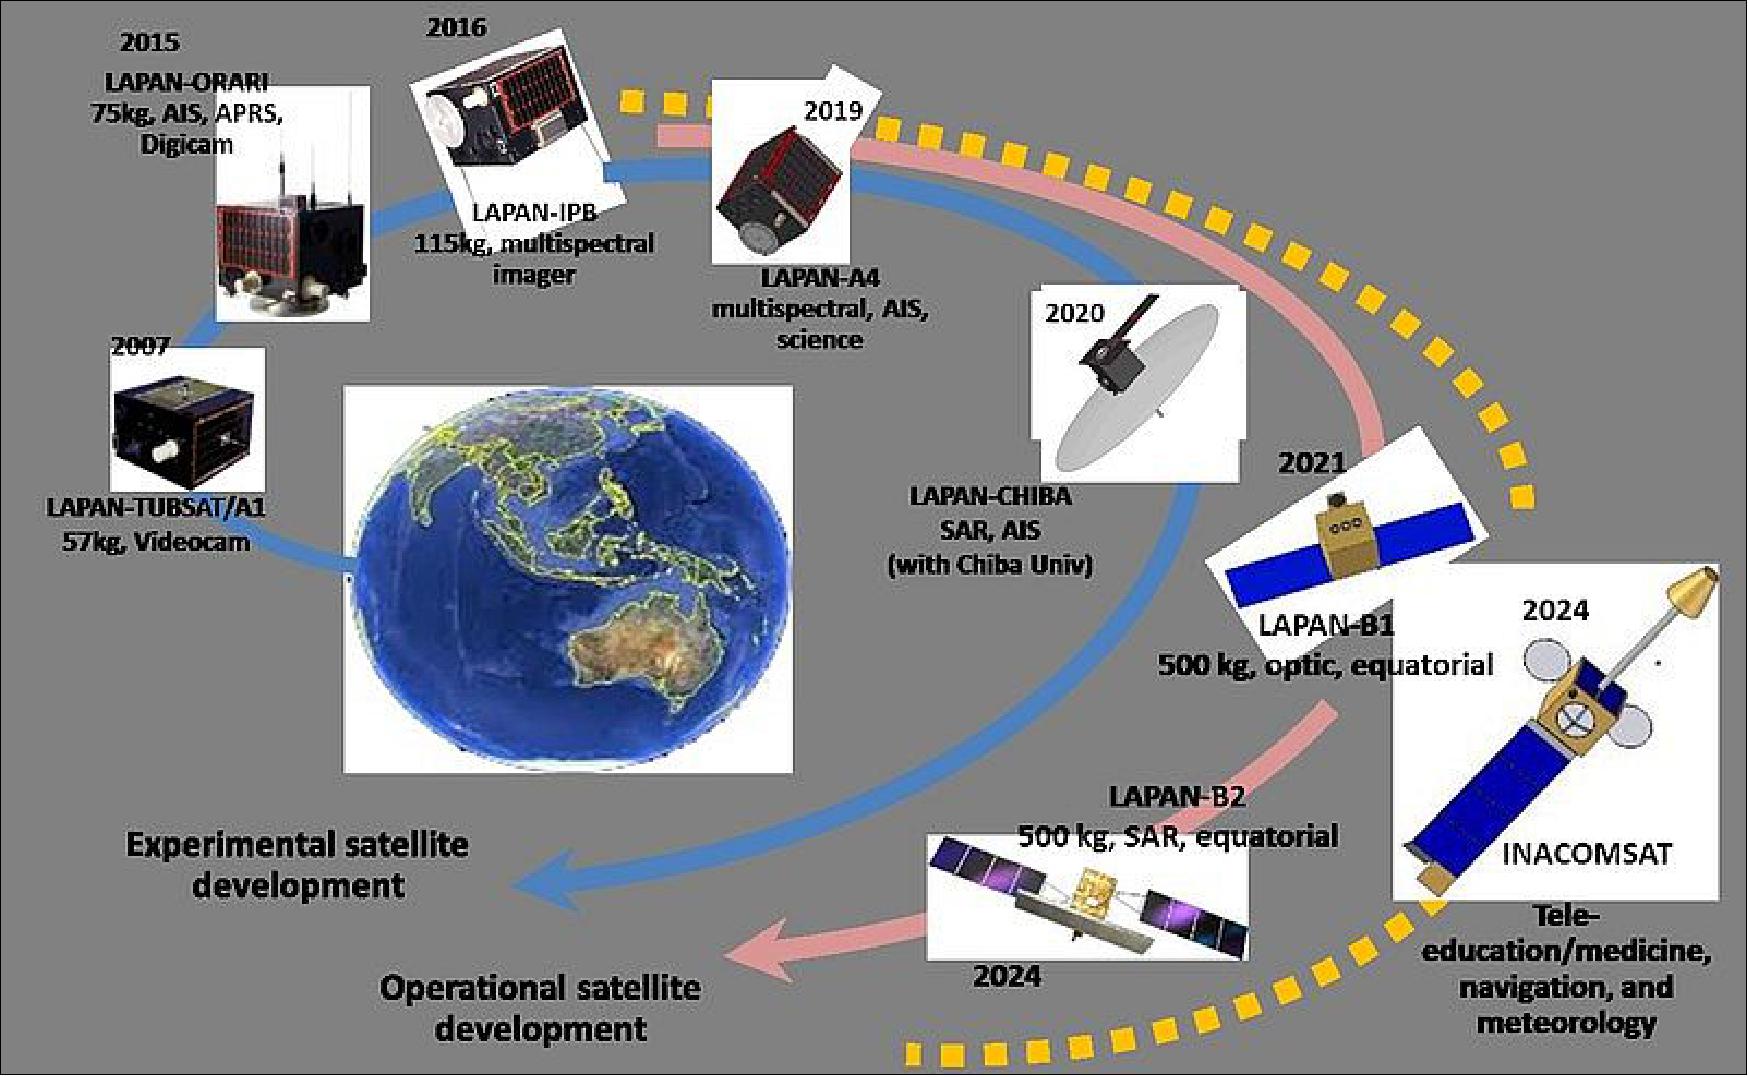 Figure 1: Overview of LAPAN's satellite development program (image credit: LAPAN)